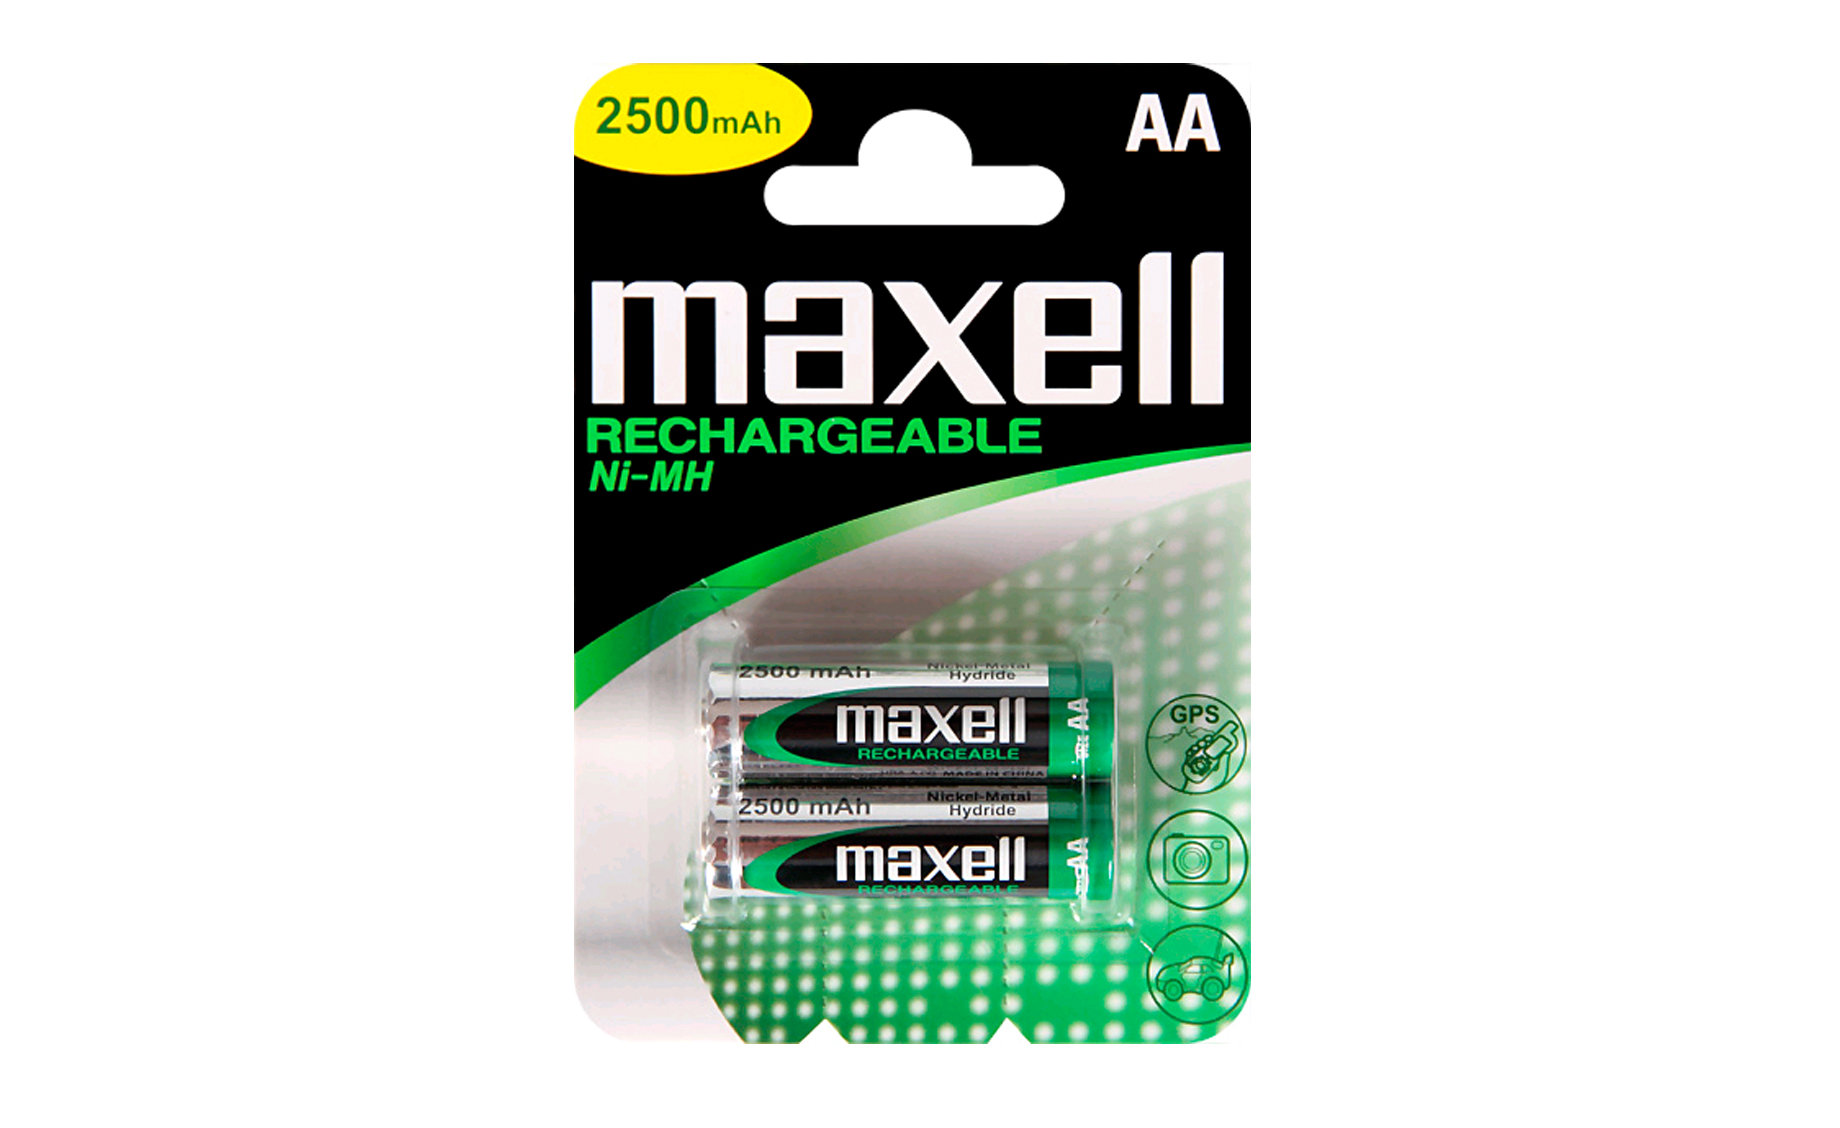 Maxell MBAANIMH25002 baterije